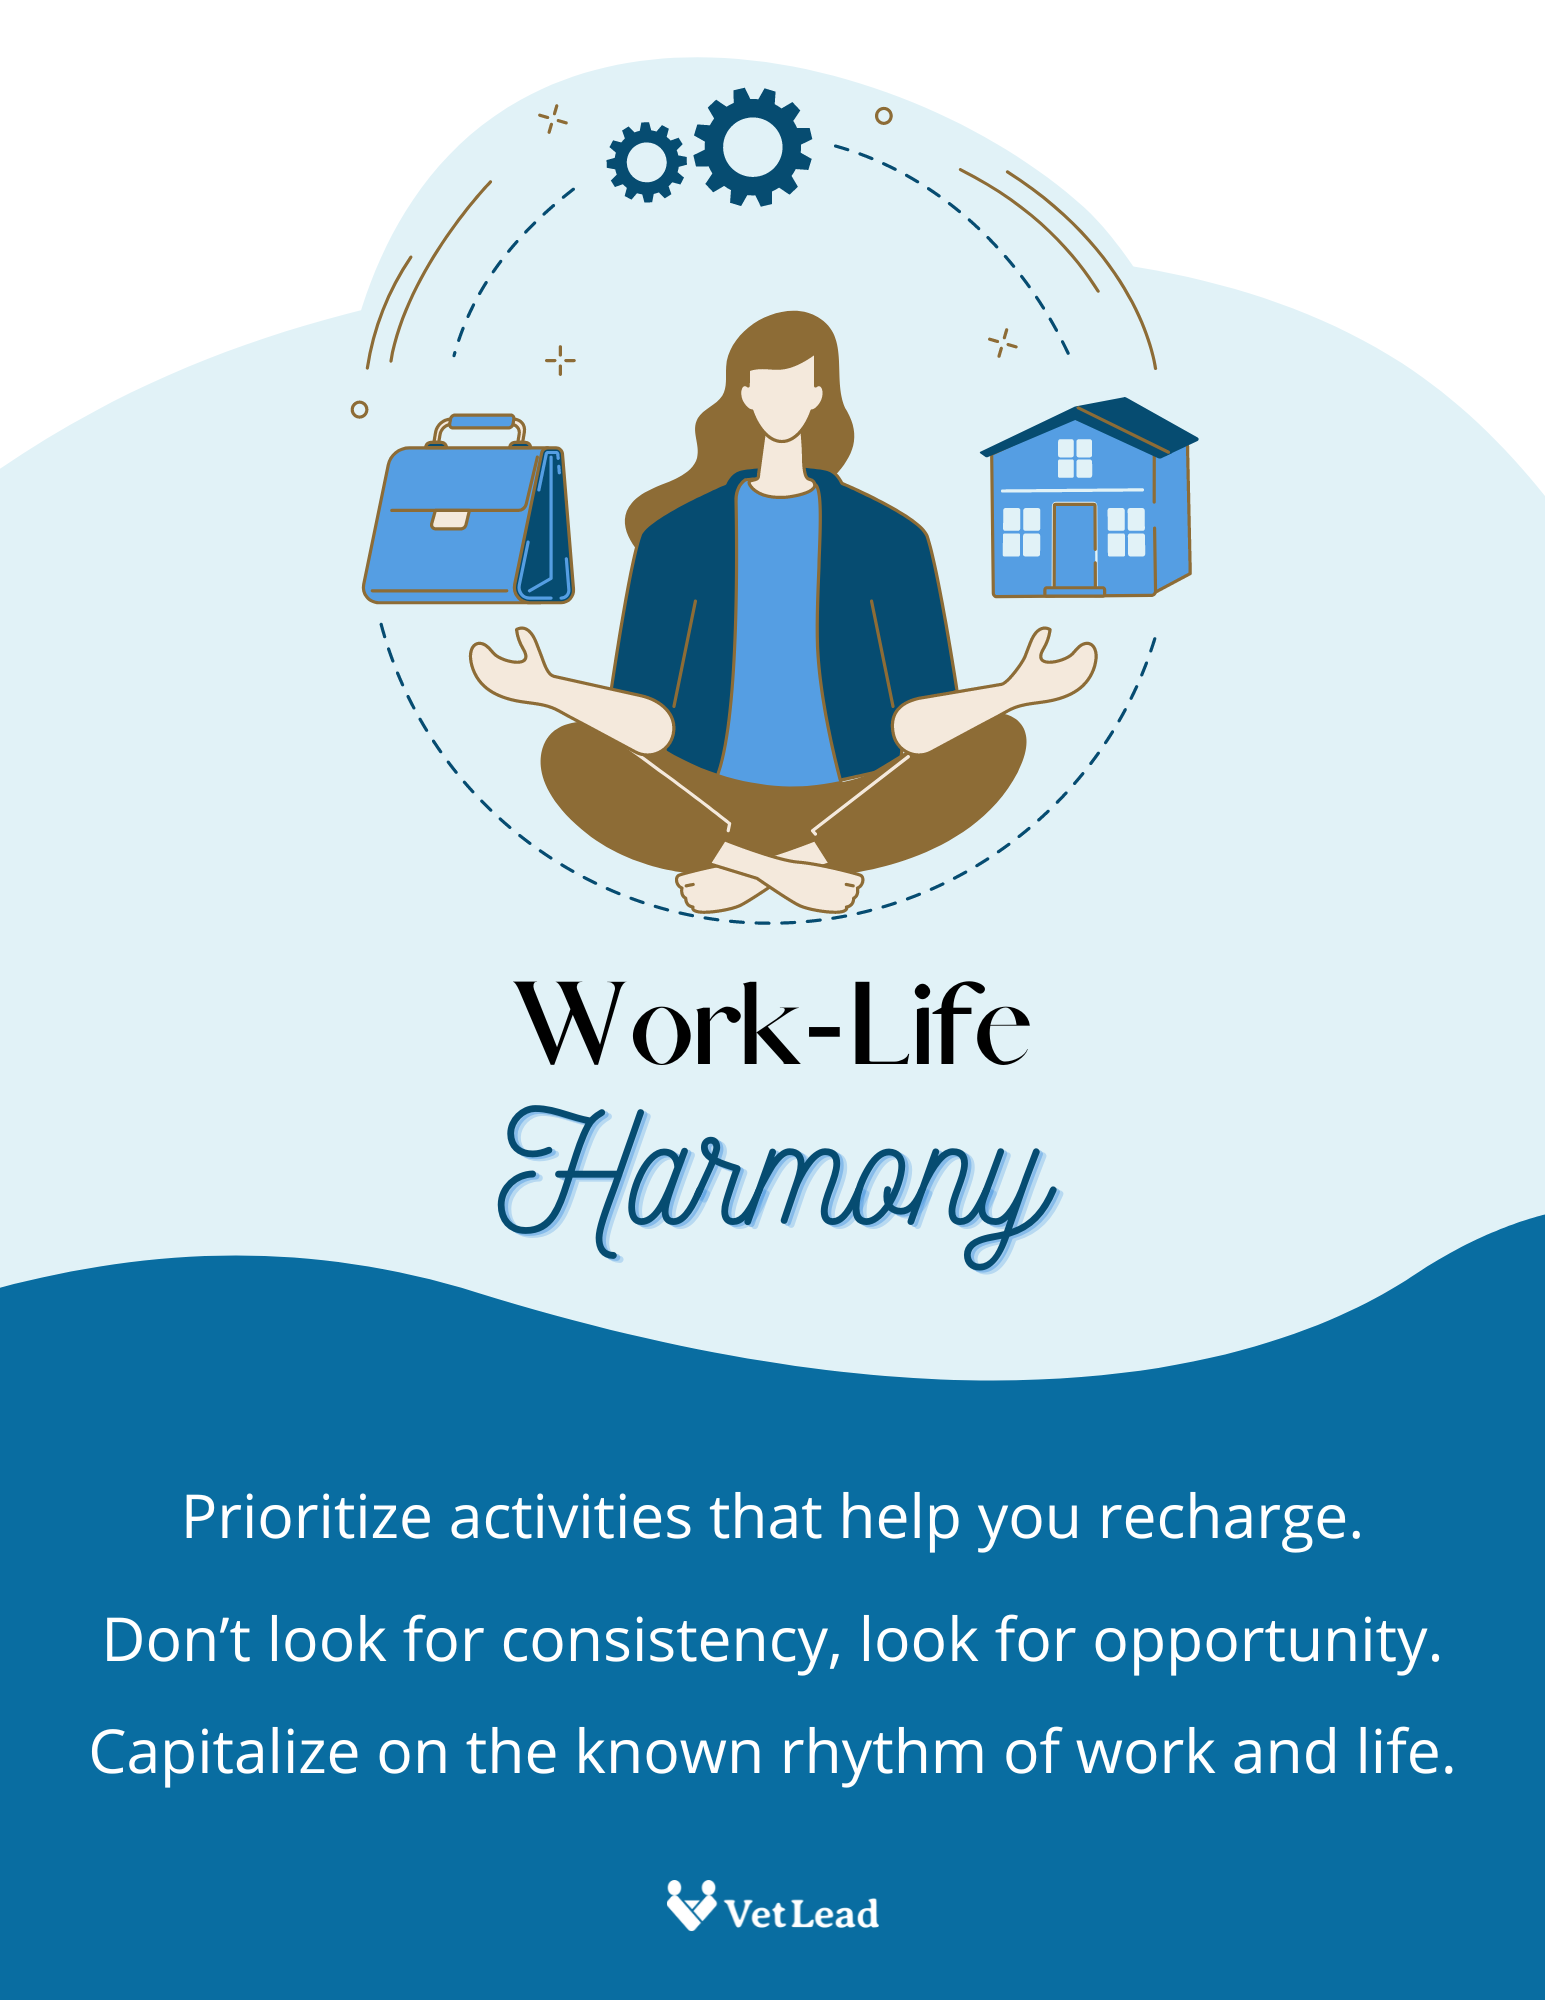 Find work-life harmony